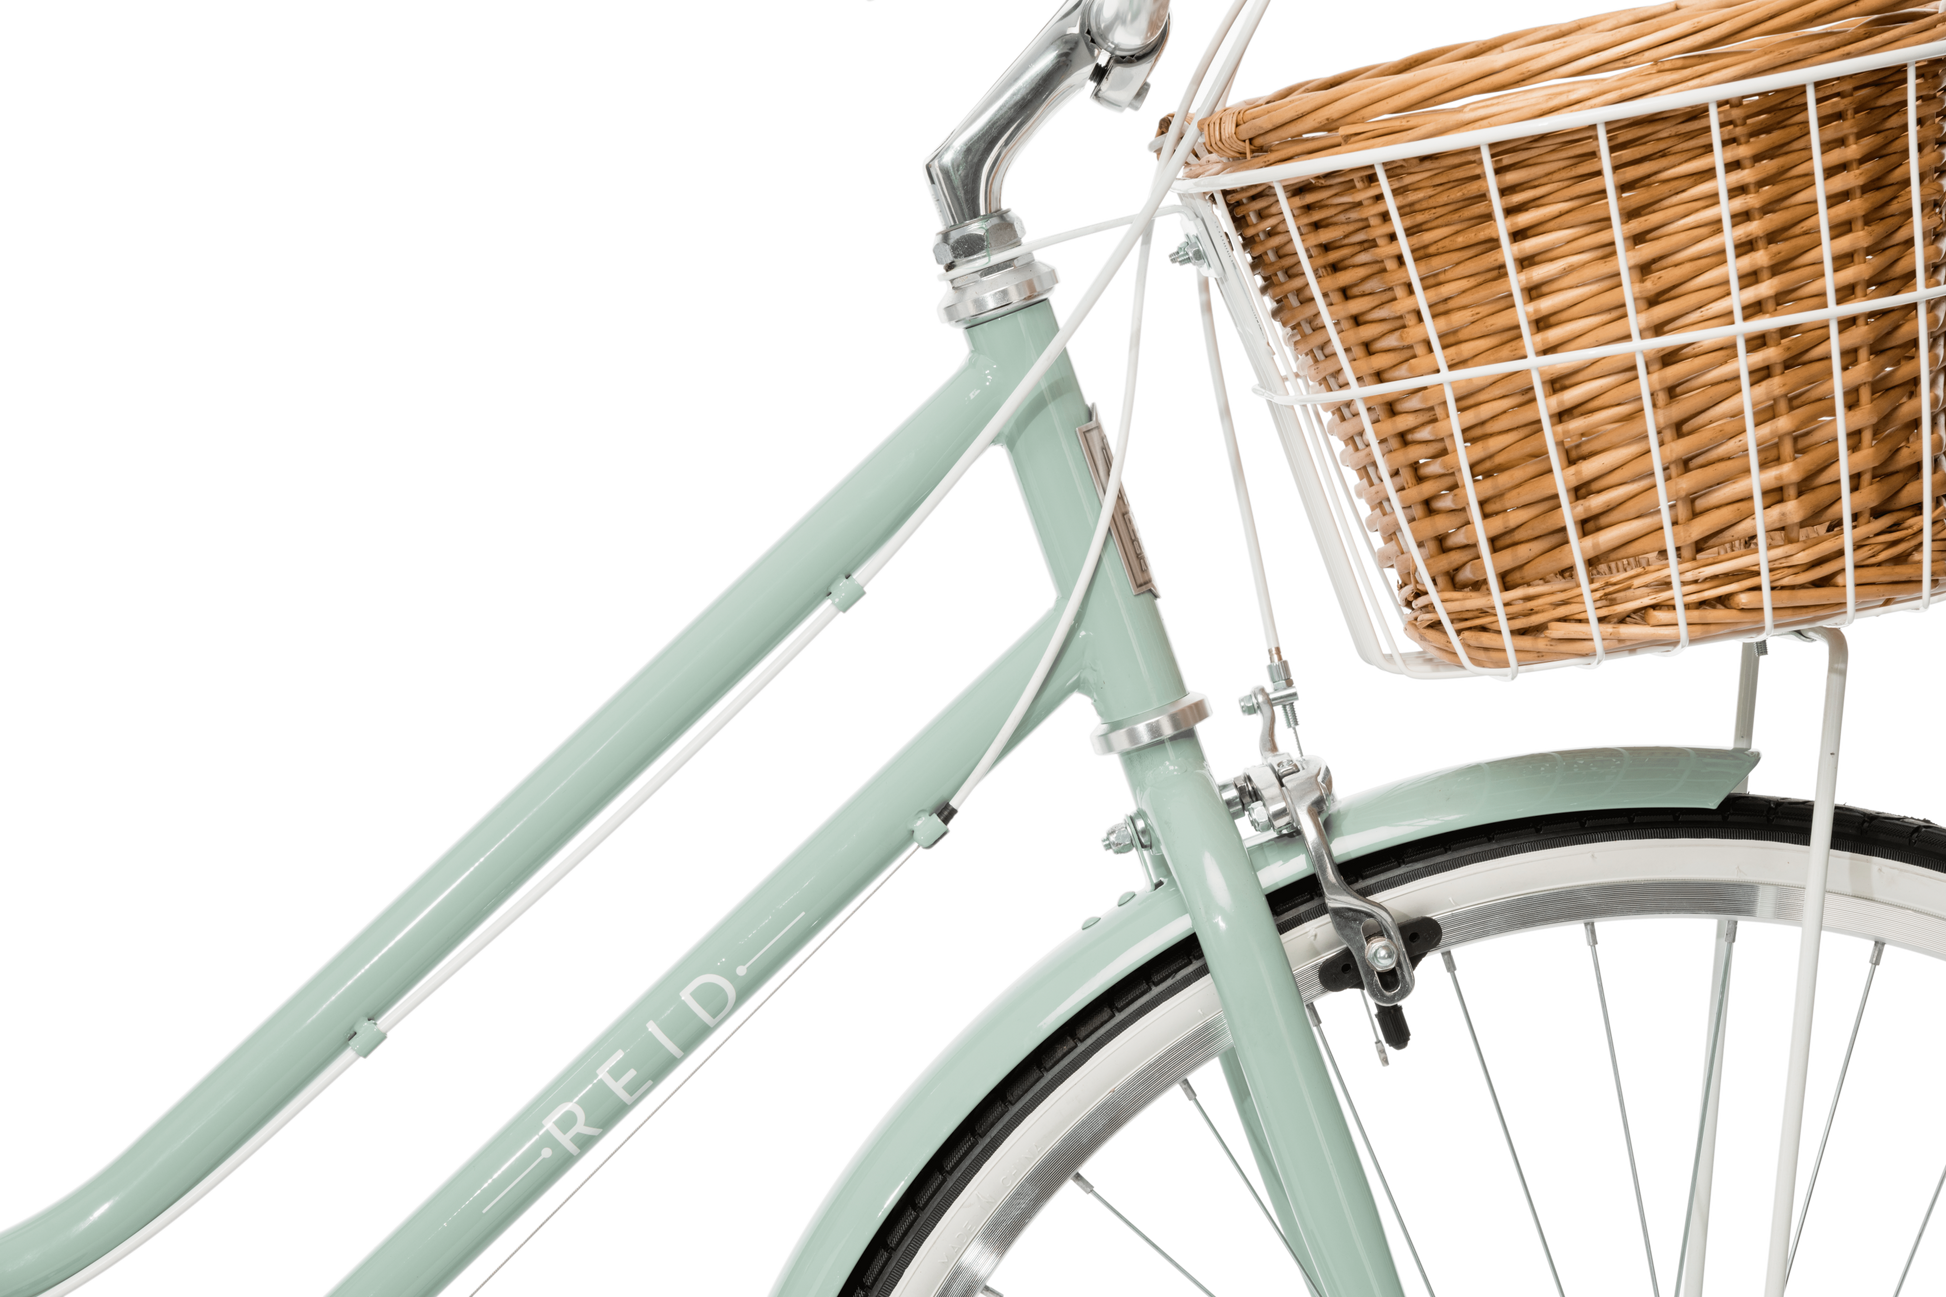 Ladies Classic Plus Vintage Bike in white showing rear pannier rack from Reid Cycles Australia